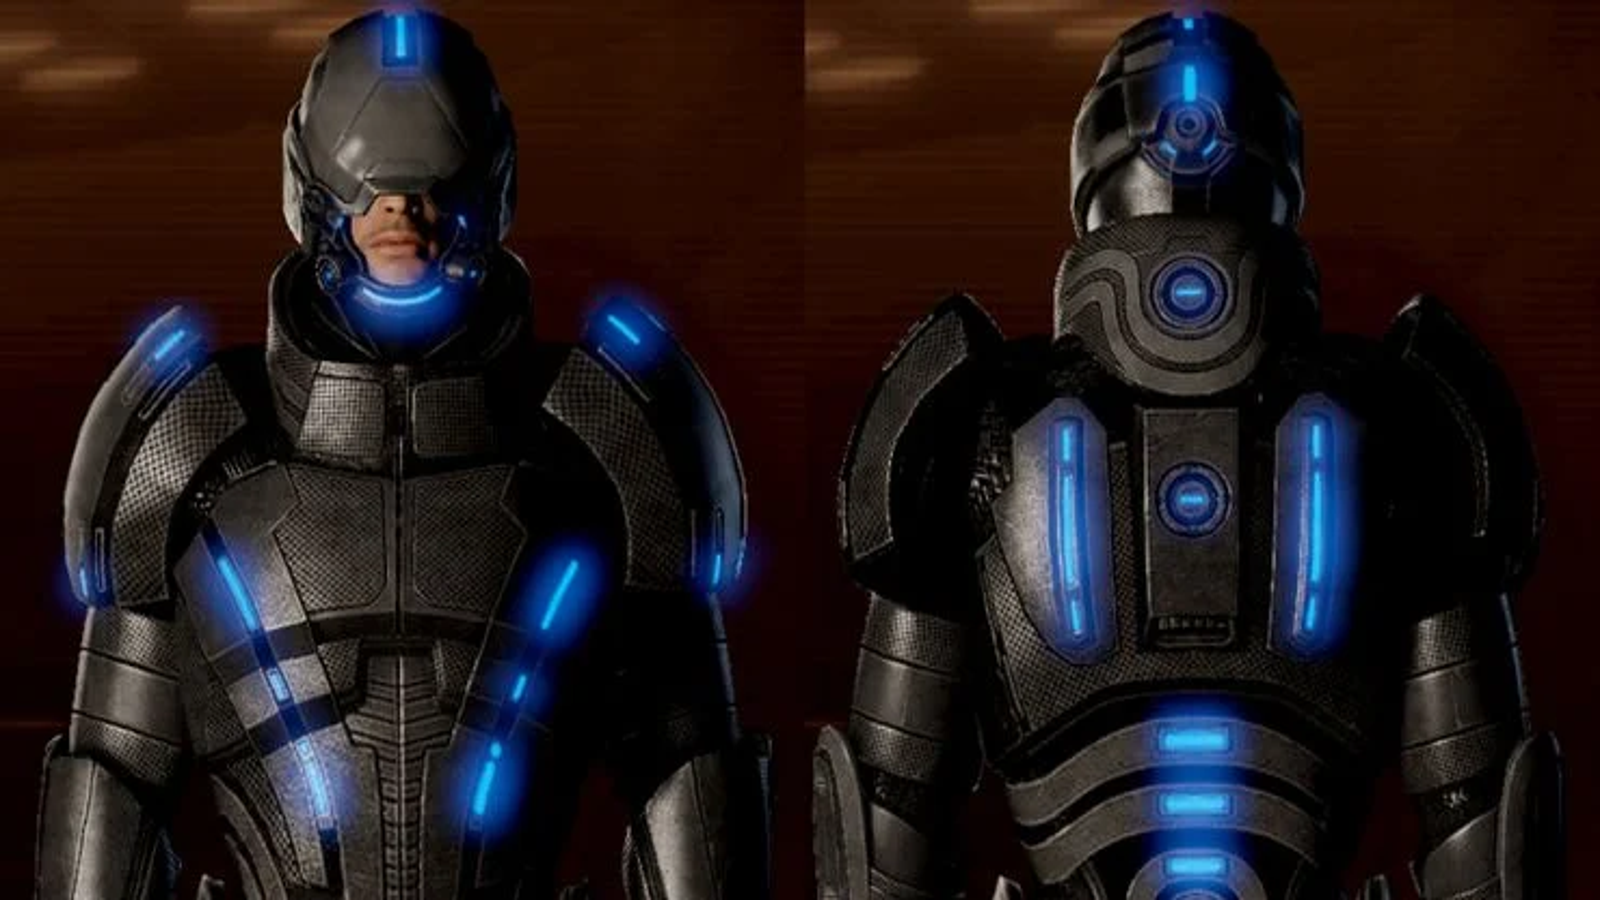 mass effect armor customization